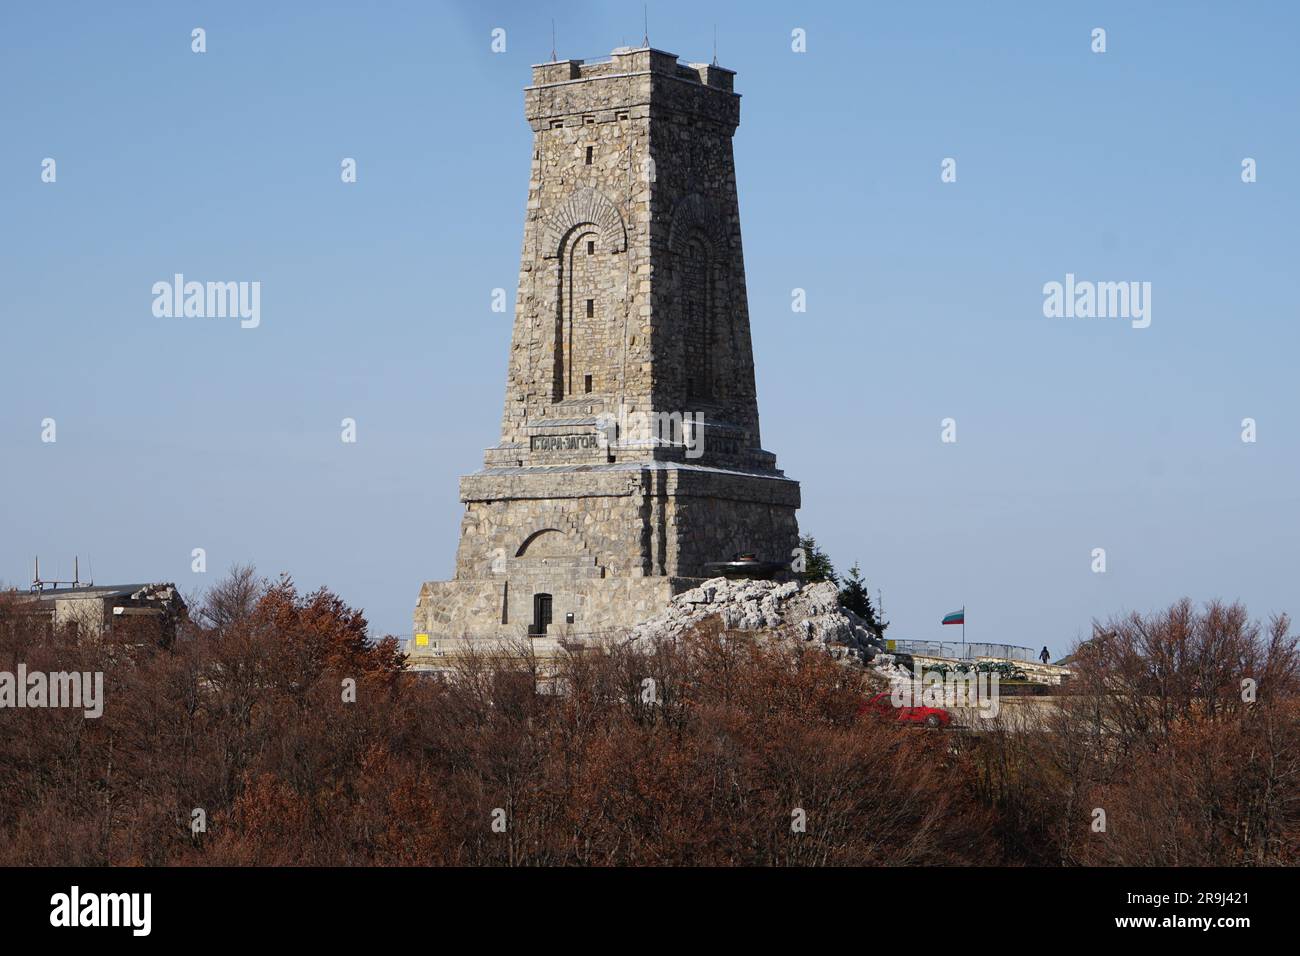 Shipka monument in Bulgaria Stara planina Stock Photo